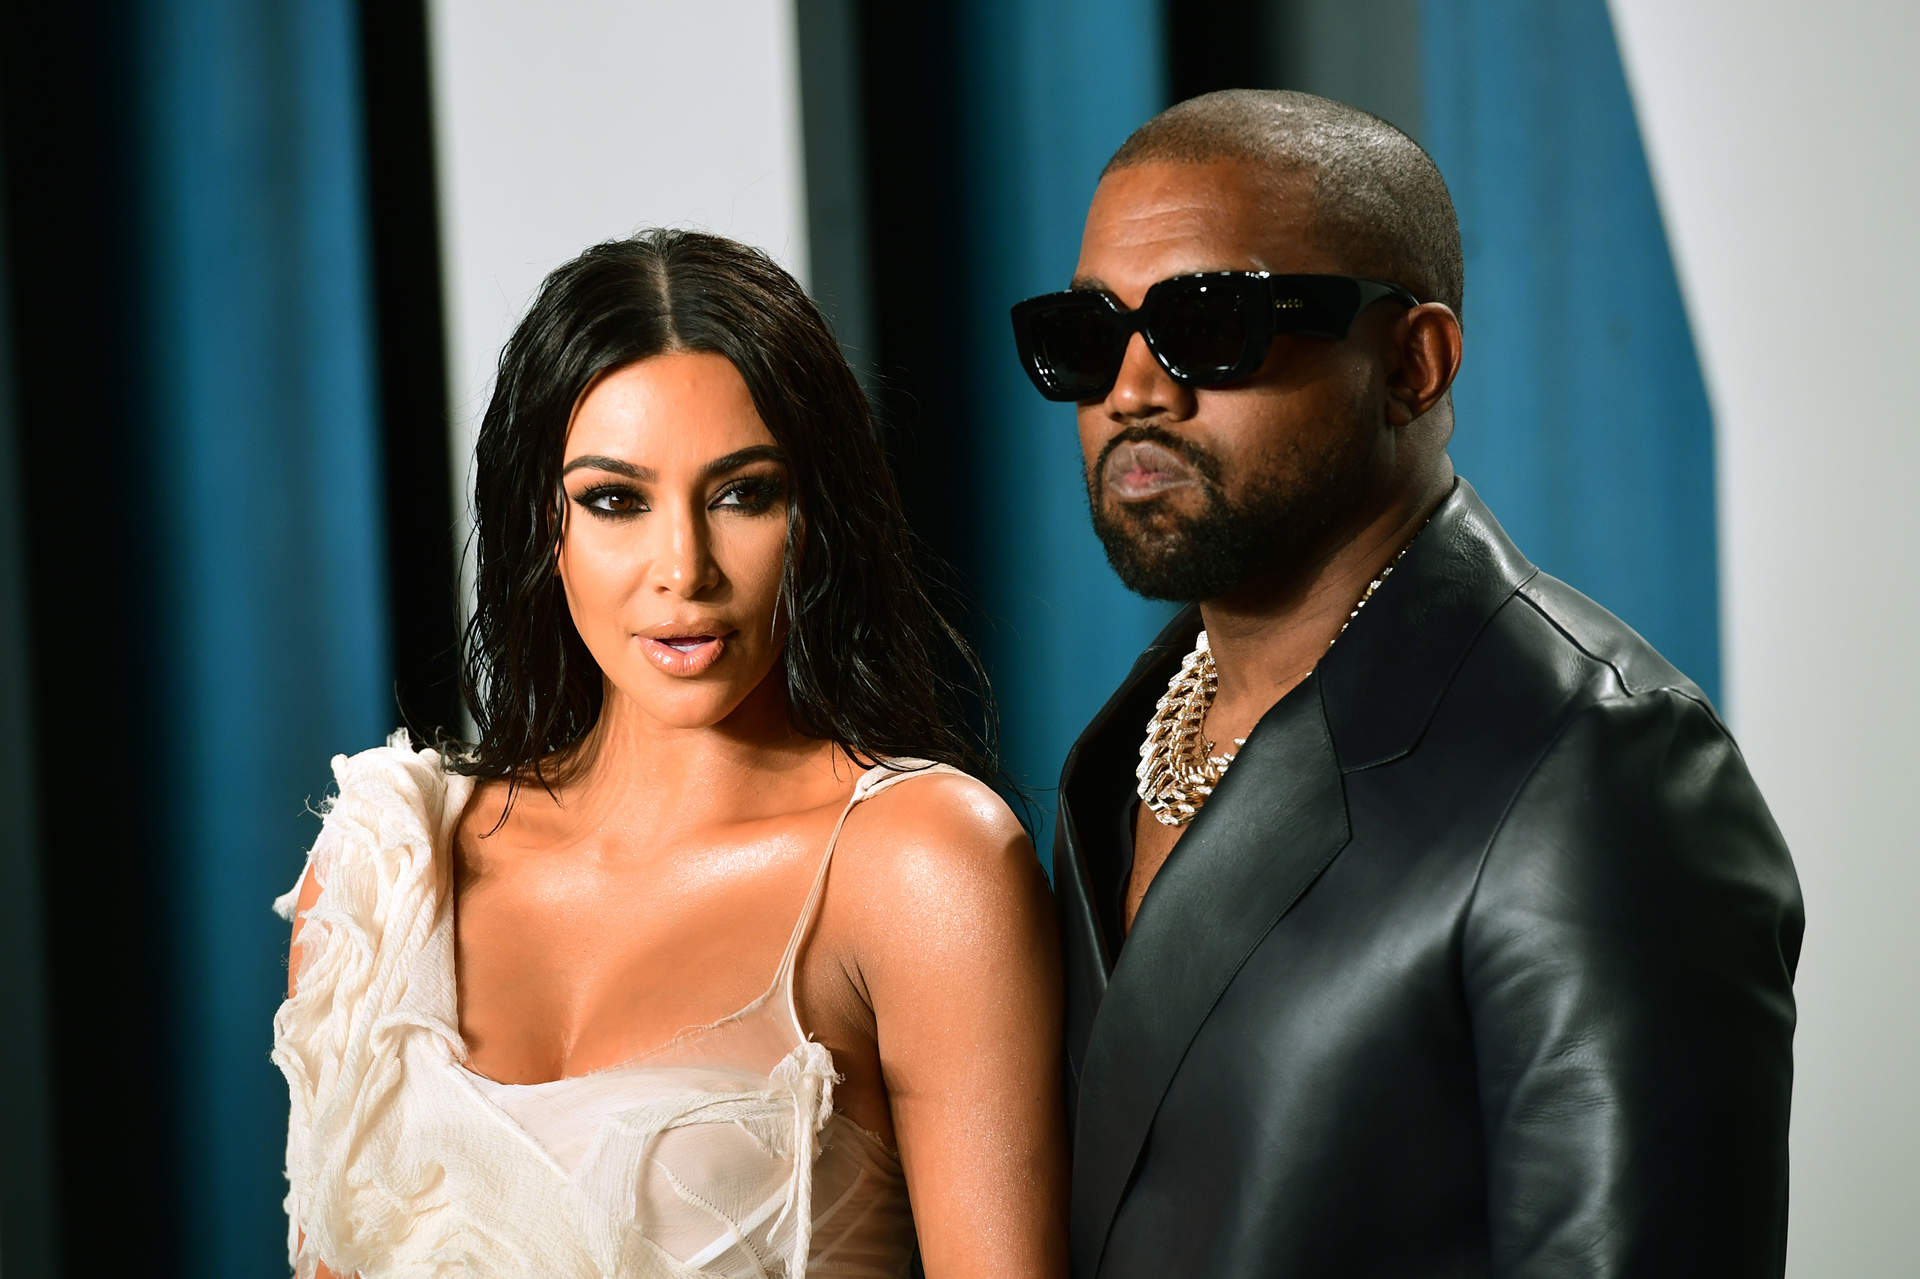 Kim Kardashian, rota de dolor, explica entre lágrimas lo difícil que está siendo criar a sus hijos junto a Kanye West